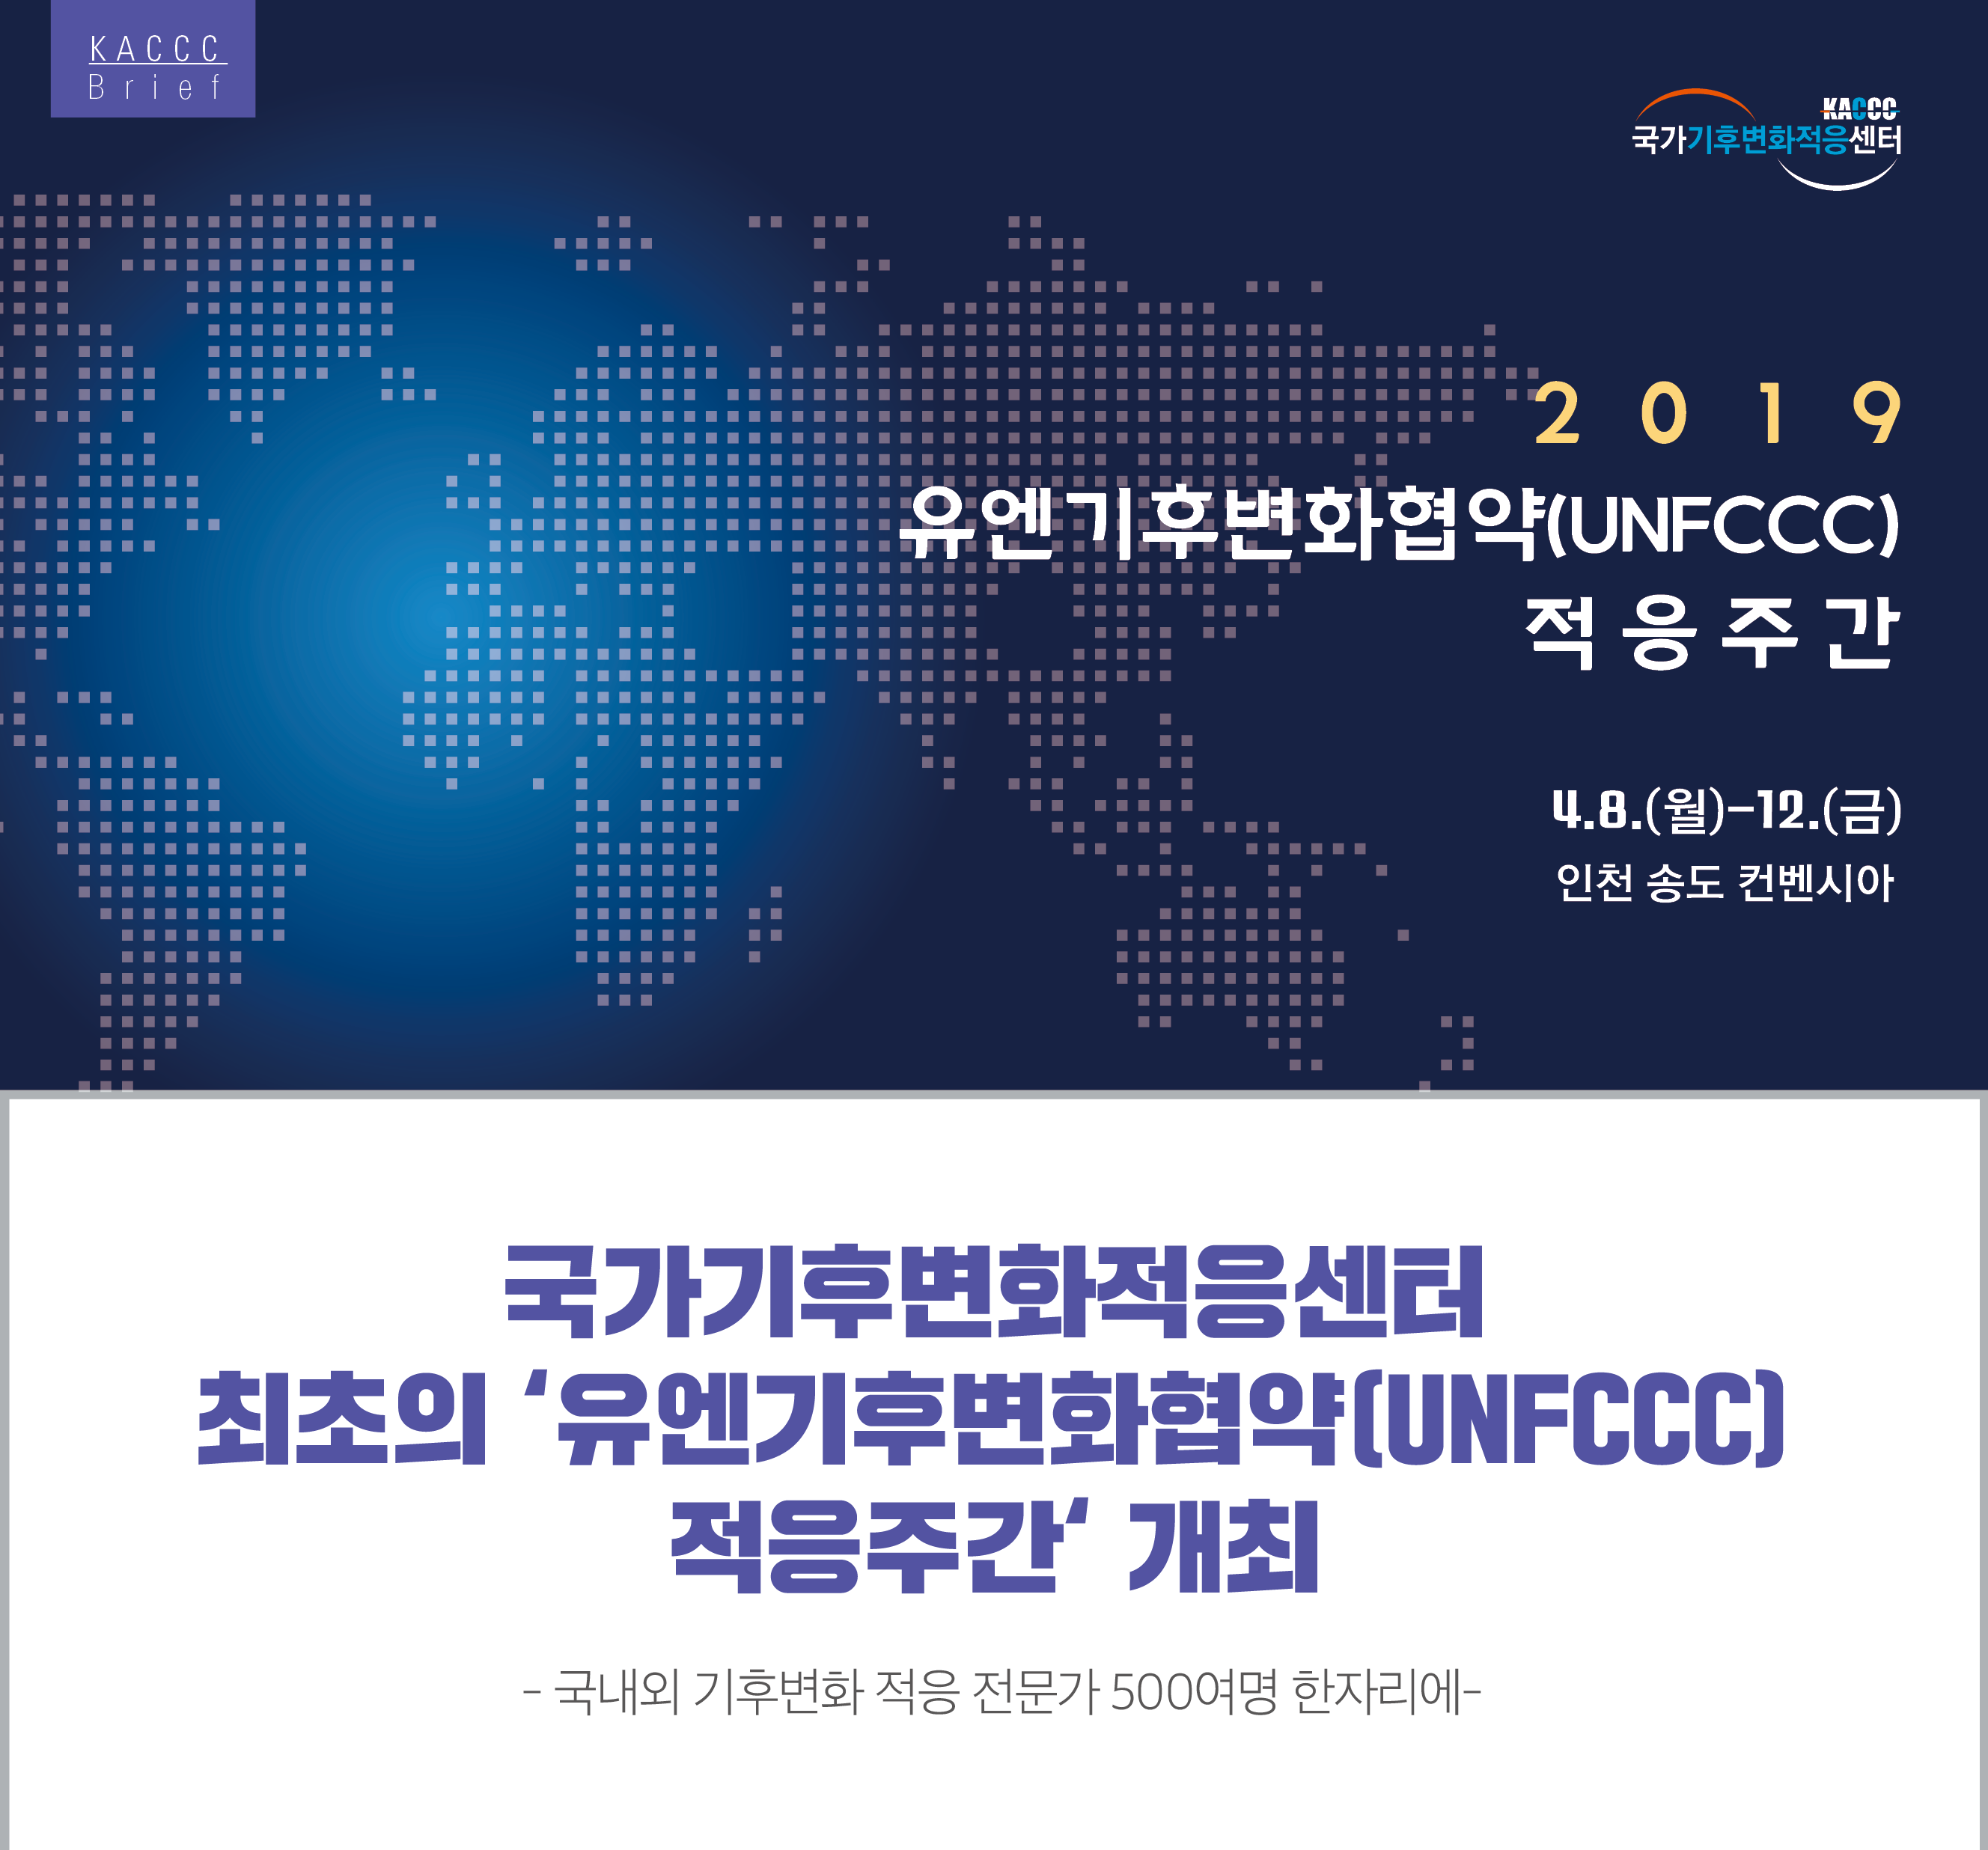 [KACCC 브리프 Vol.2019-특별호] 국가기후변화적응센터, 유엔기후변화협약(UNFCCC)적응주간 개최 